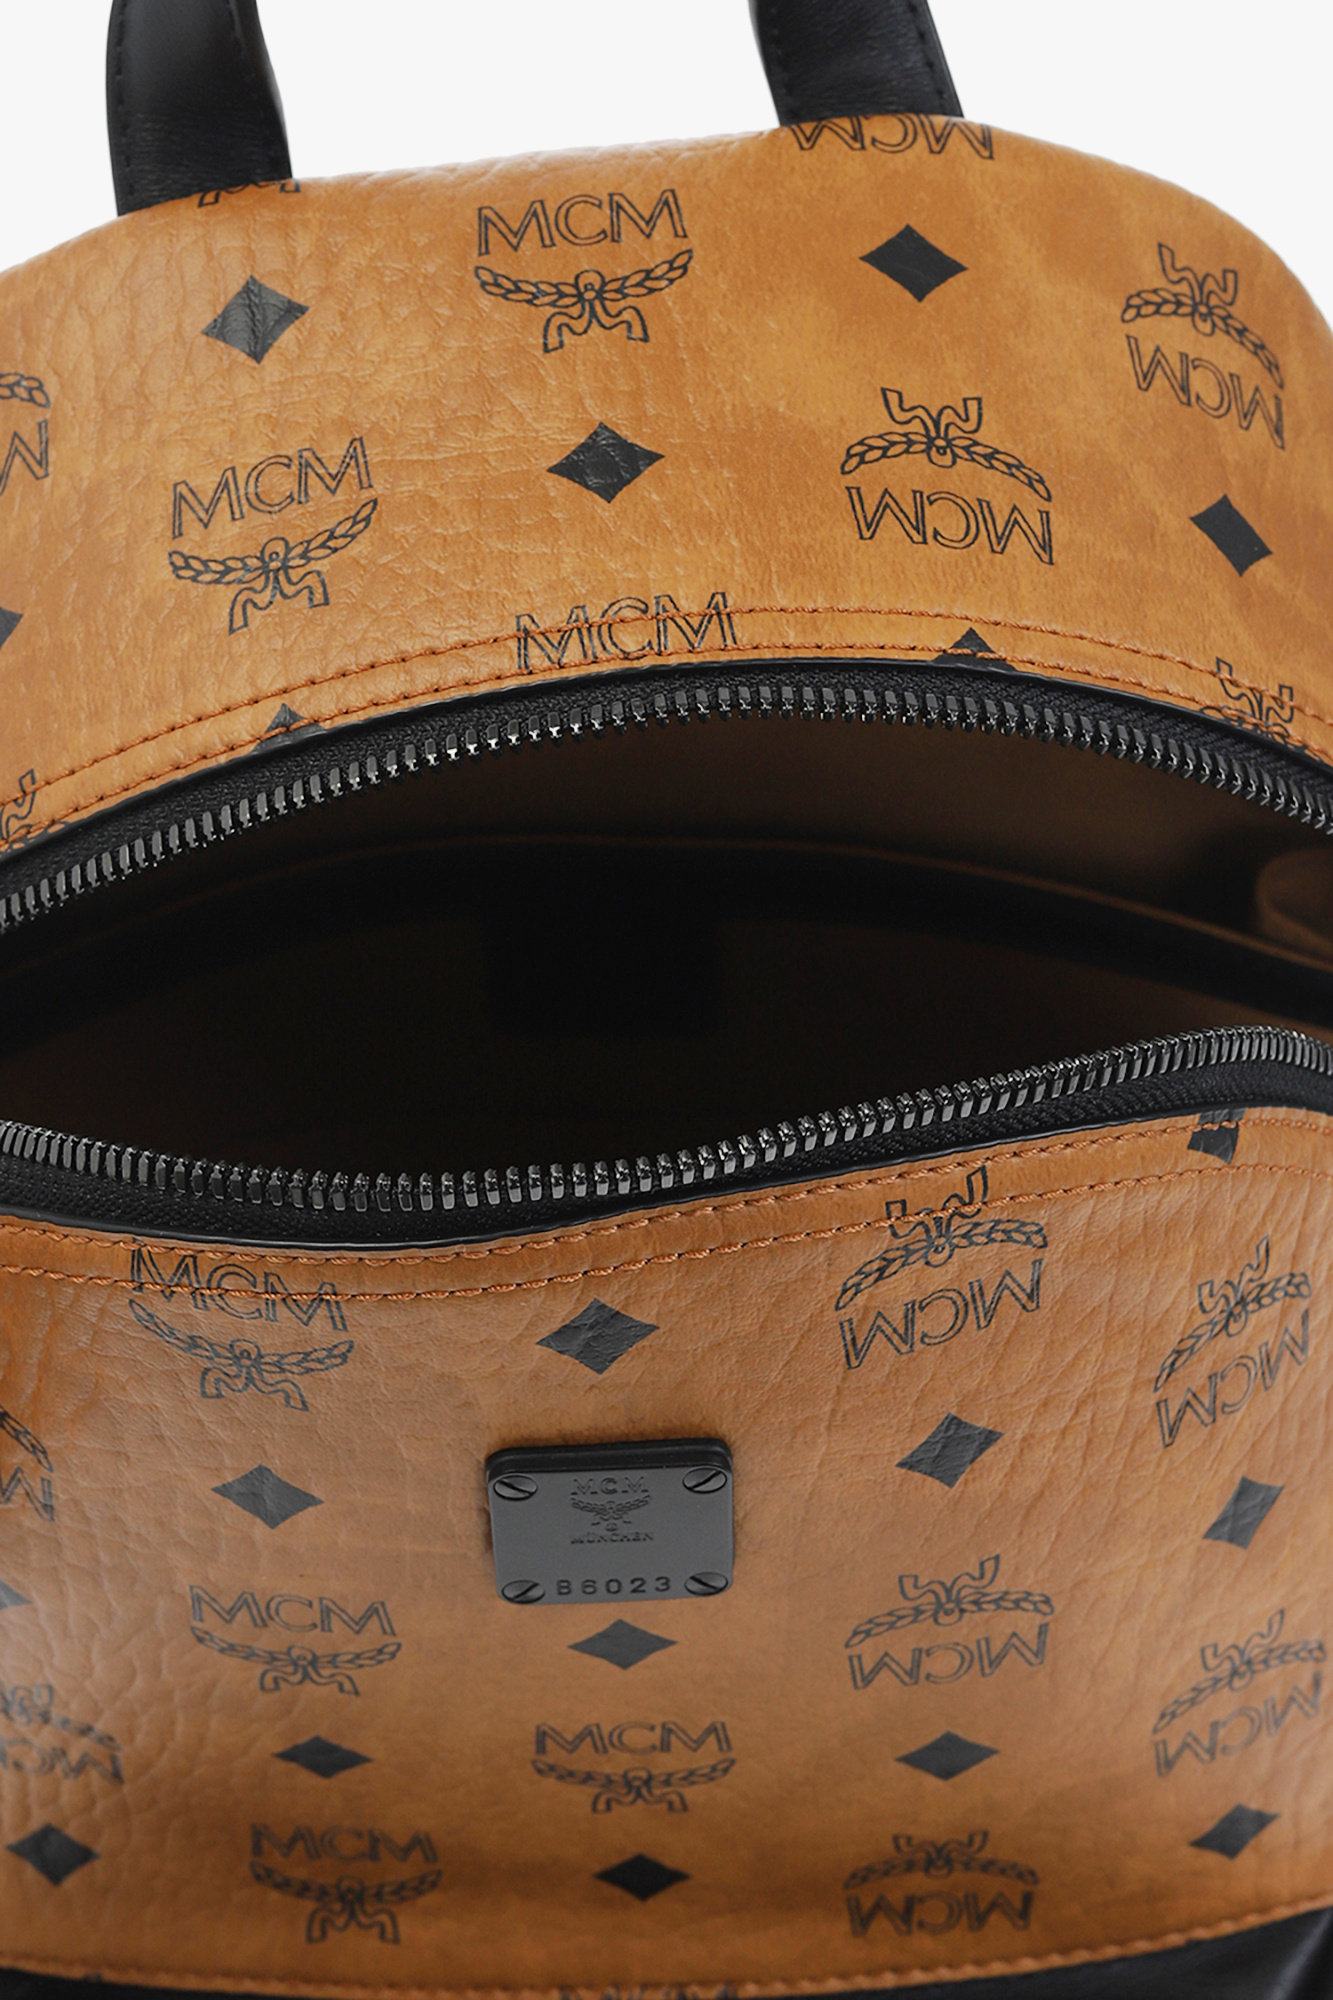 CamaragrancanariaShops Gabon - Brown 'Stark' backpack with logo MCM - Beige  Leather Wild Stitch Boston Bag Small